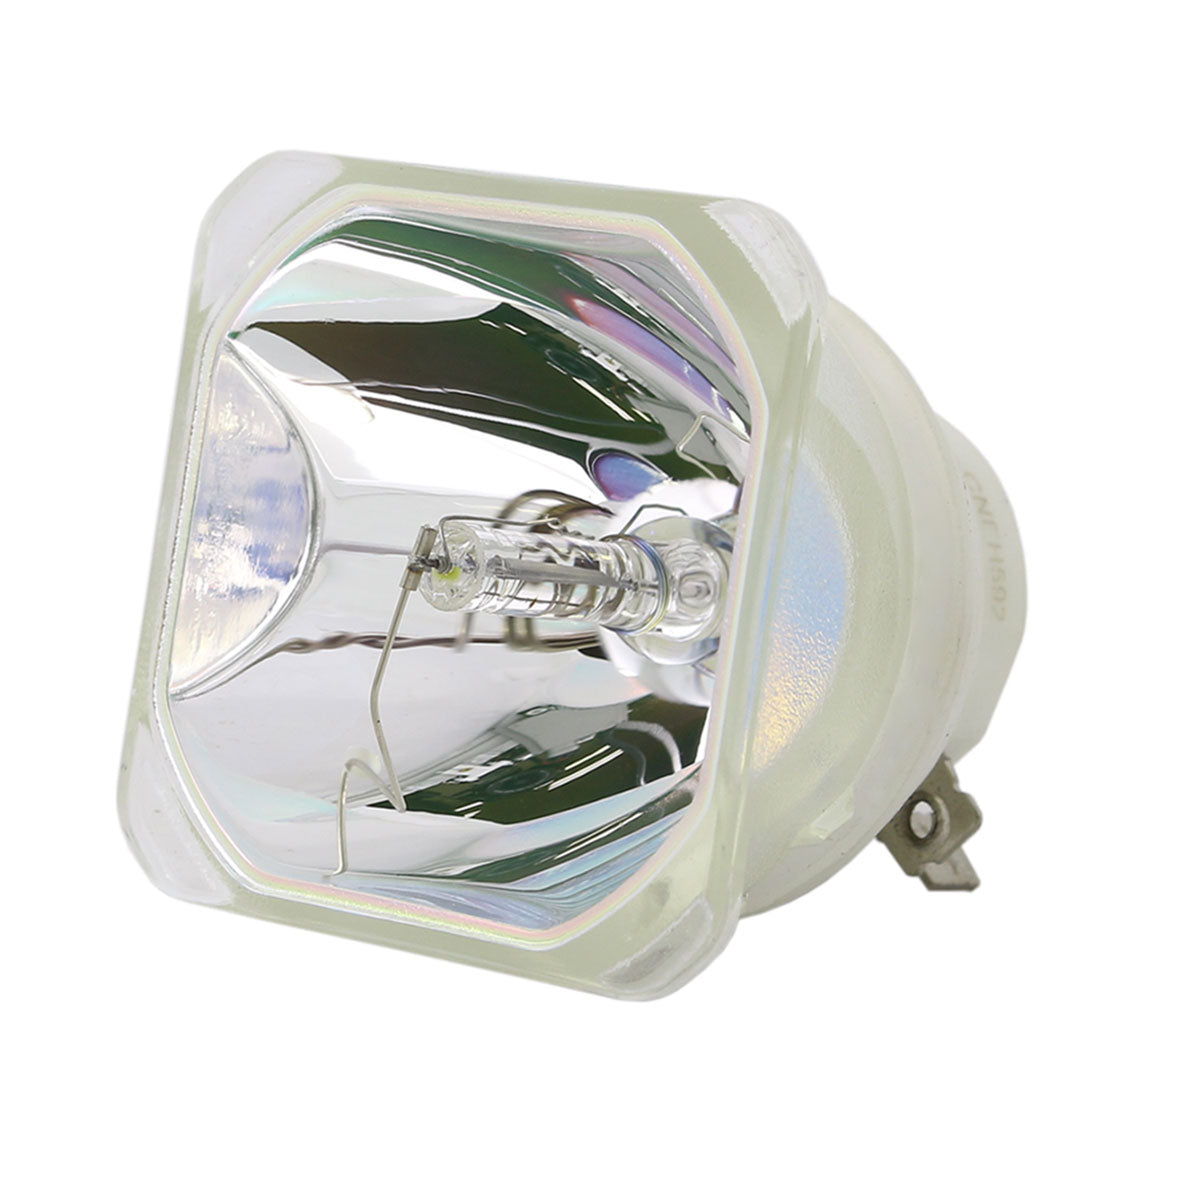 Boxlight WX25NU-930 Ushio Projector Bare Lamp